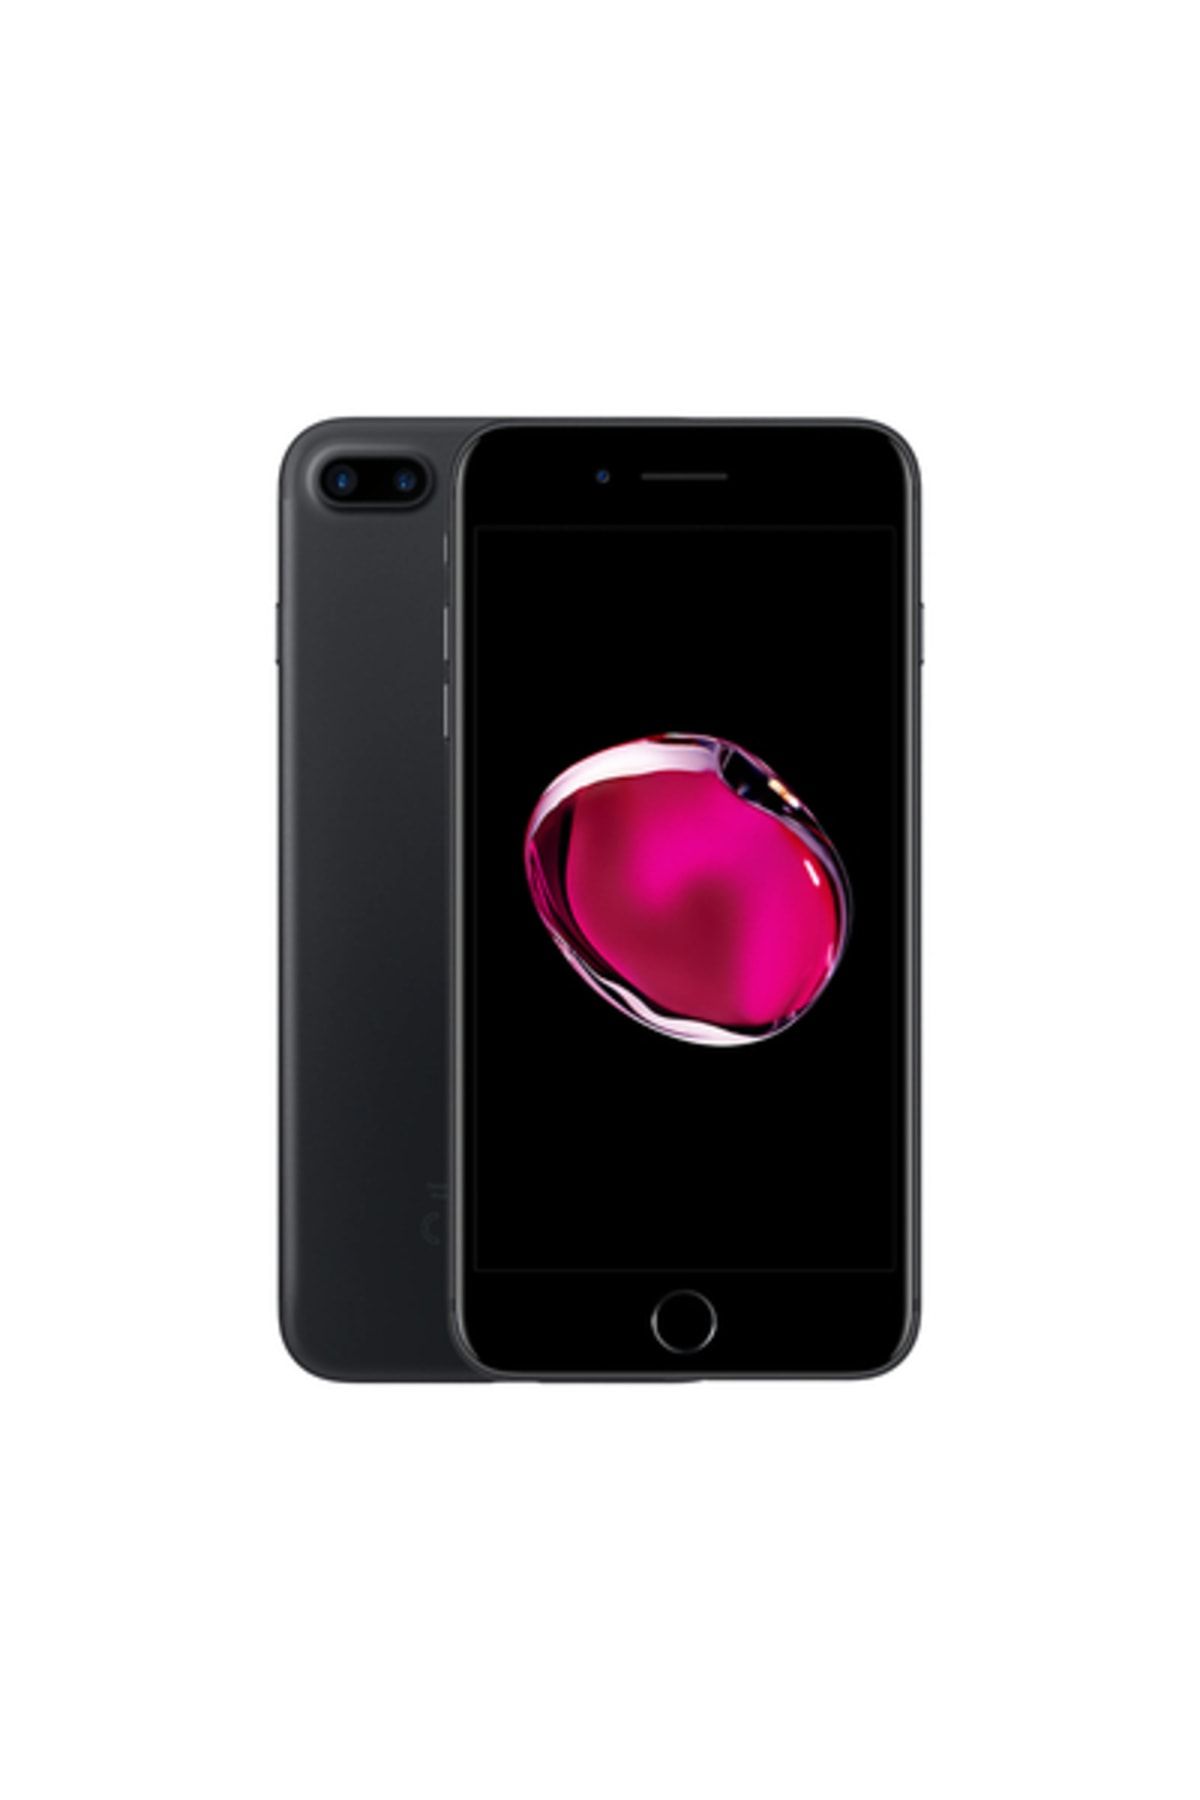 Apple Yenilenmiş iPhone 7 Plus 32 GB Siyah Cep Telefonu (12 Ay Garantili) - B Kalite